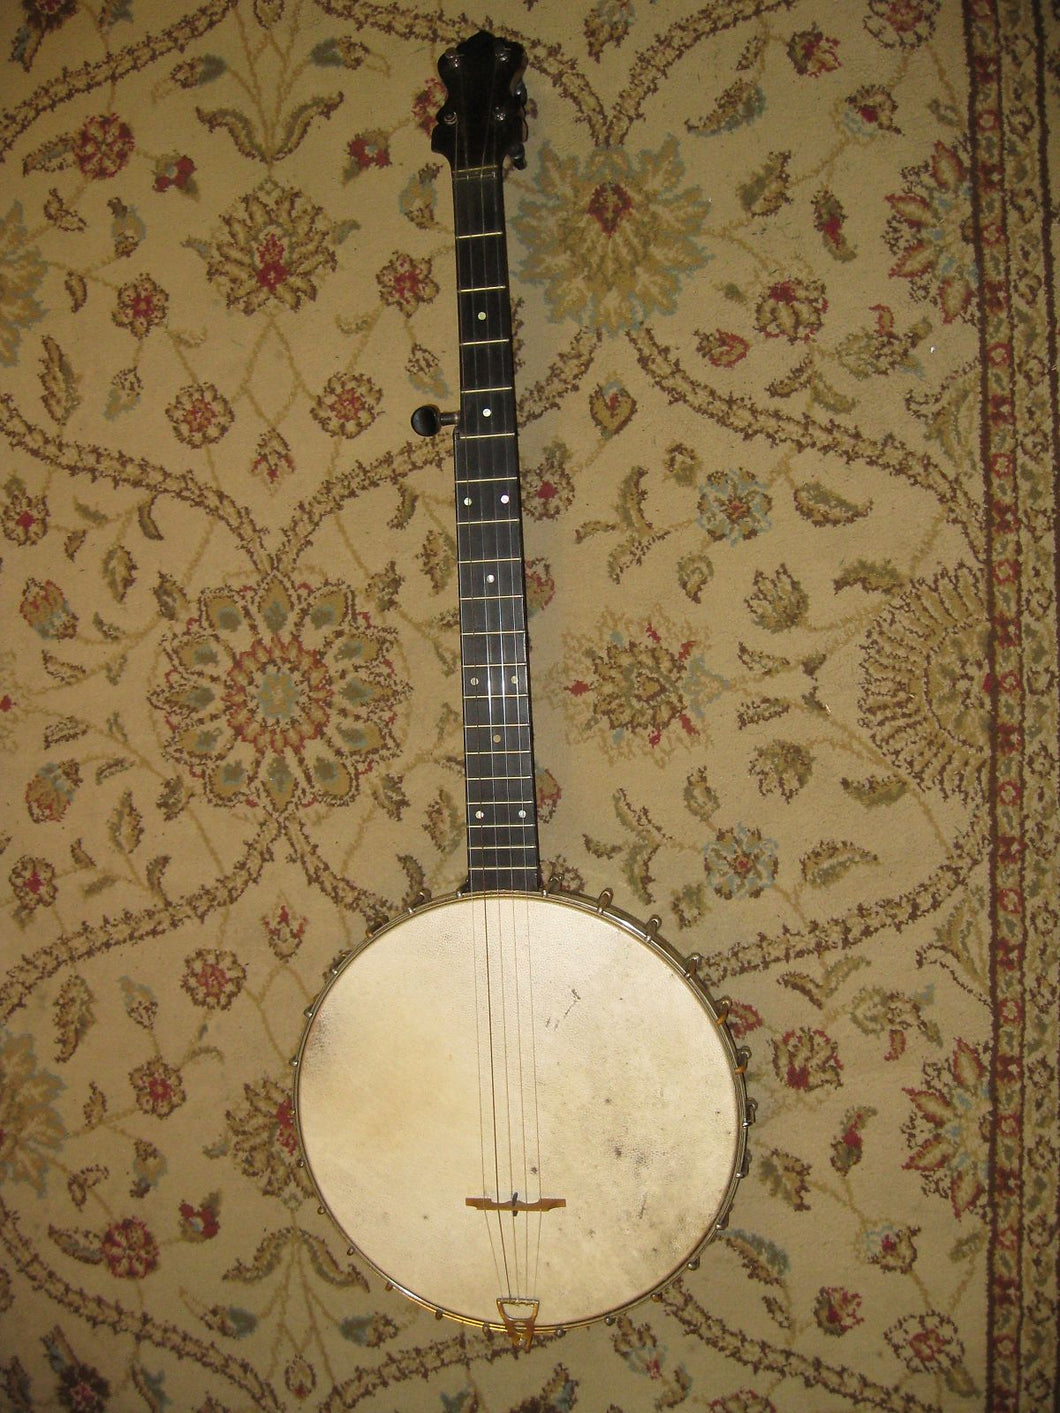 Luscomb Open back banjo c. 1890s - Jakes Main Street Music